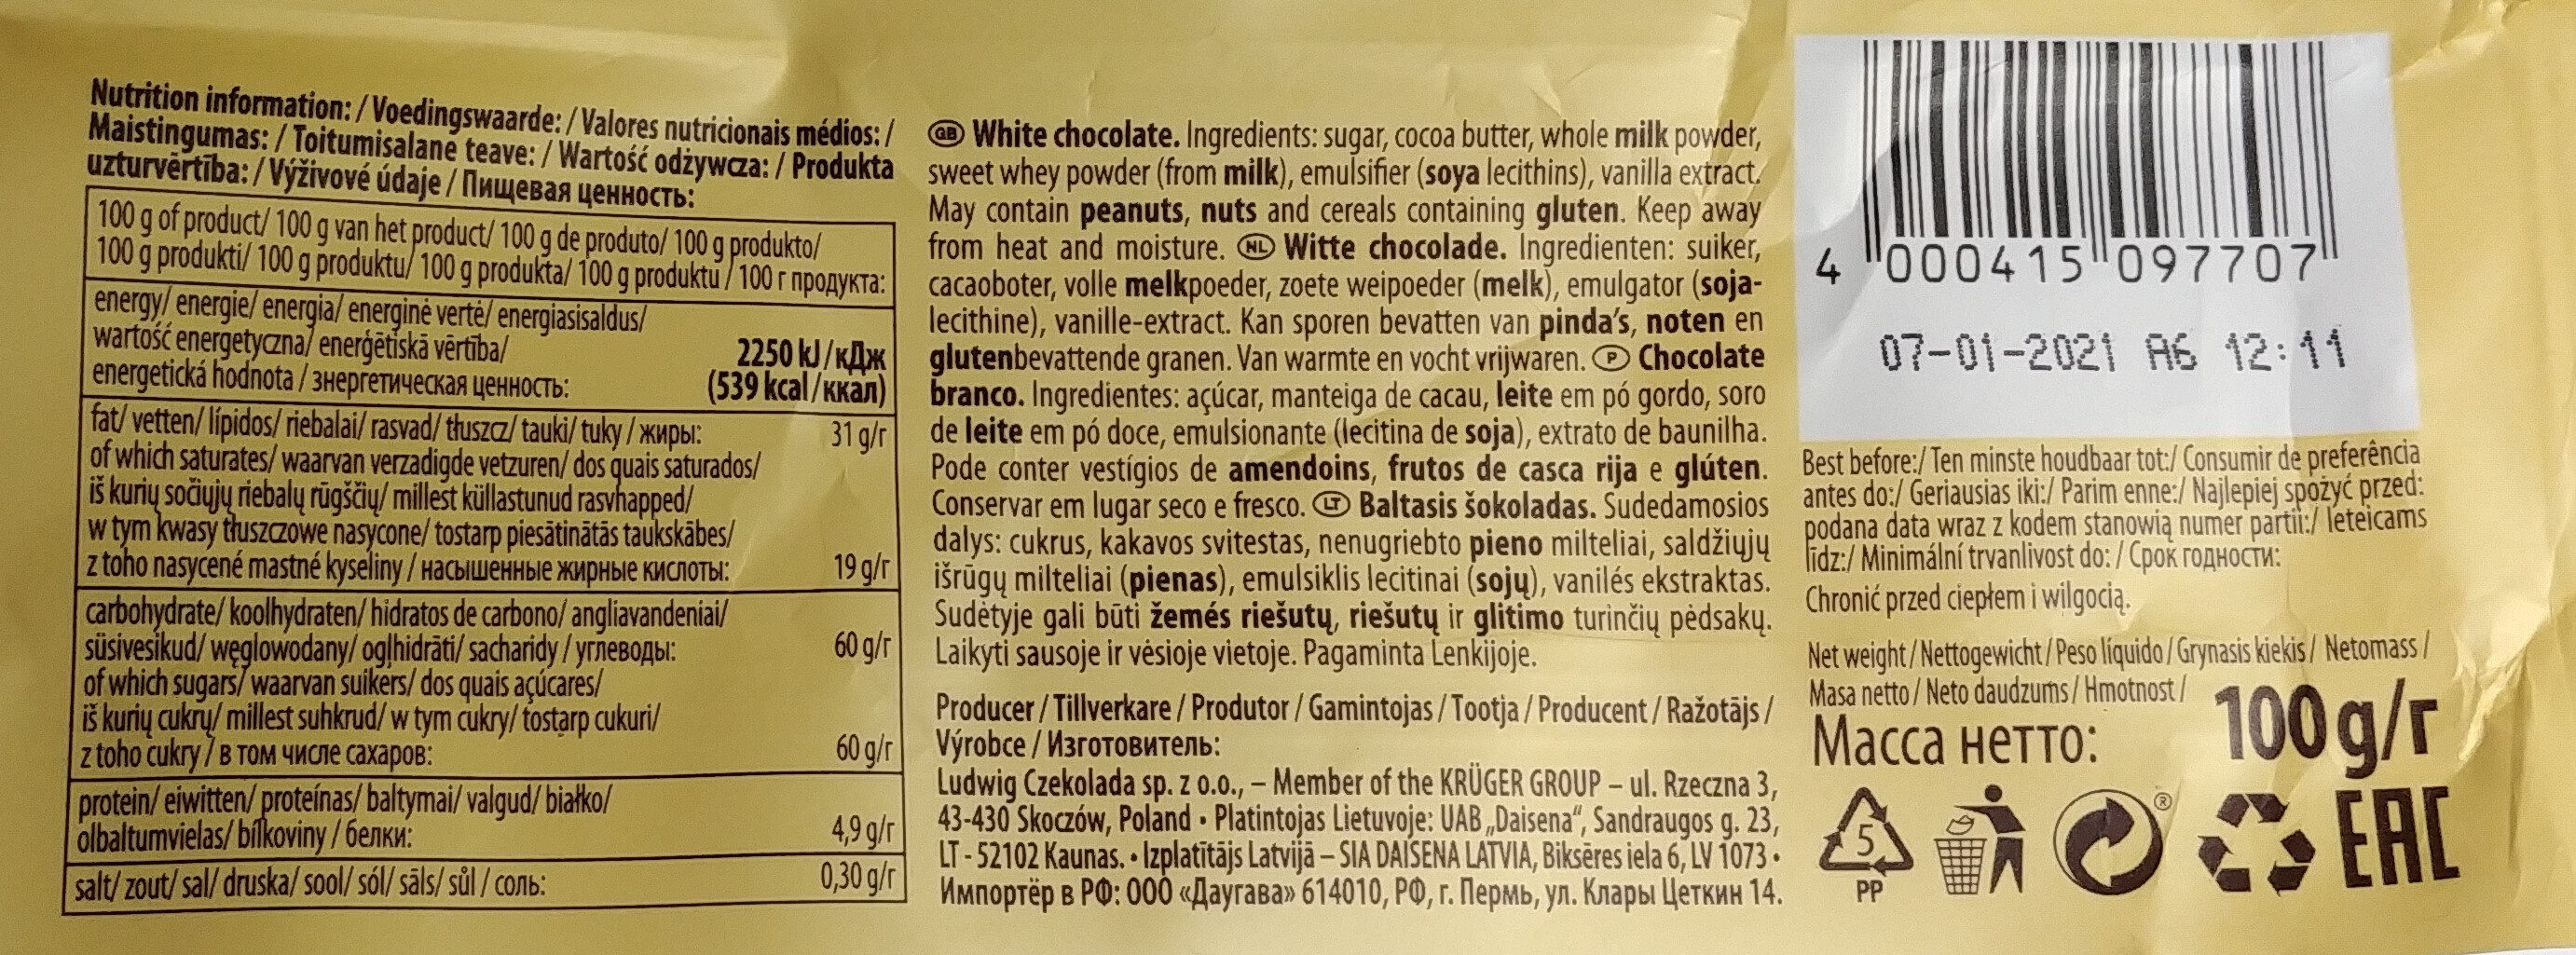 Biała czekolada - Näringsfakta - pl